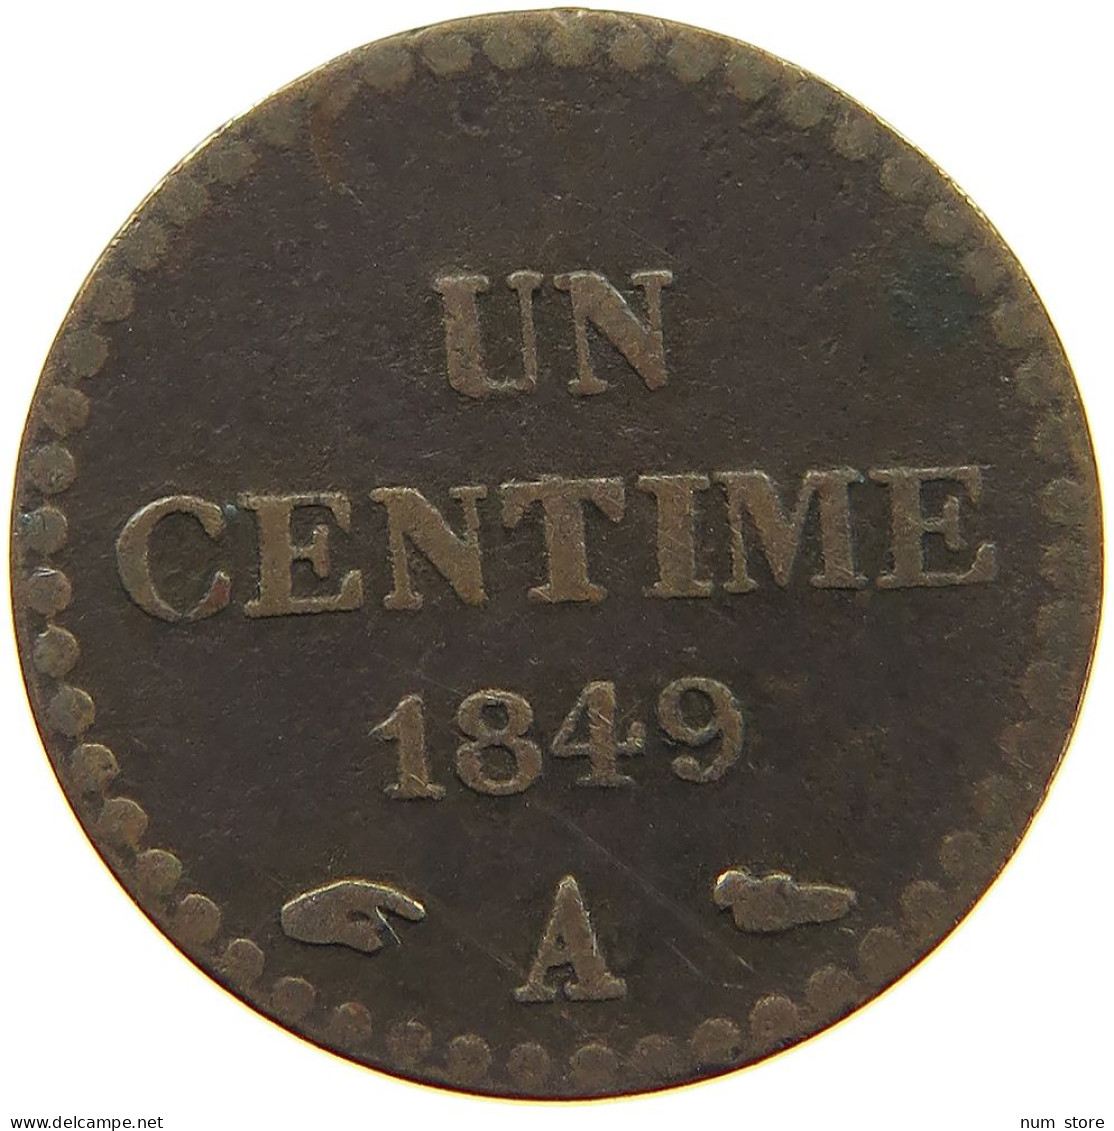 FRANCE 1 CENTIME 1849 A #c065 0051 - 1 Centime